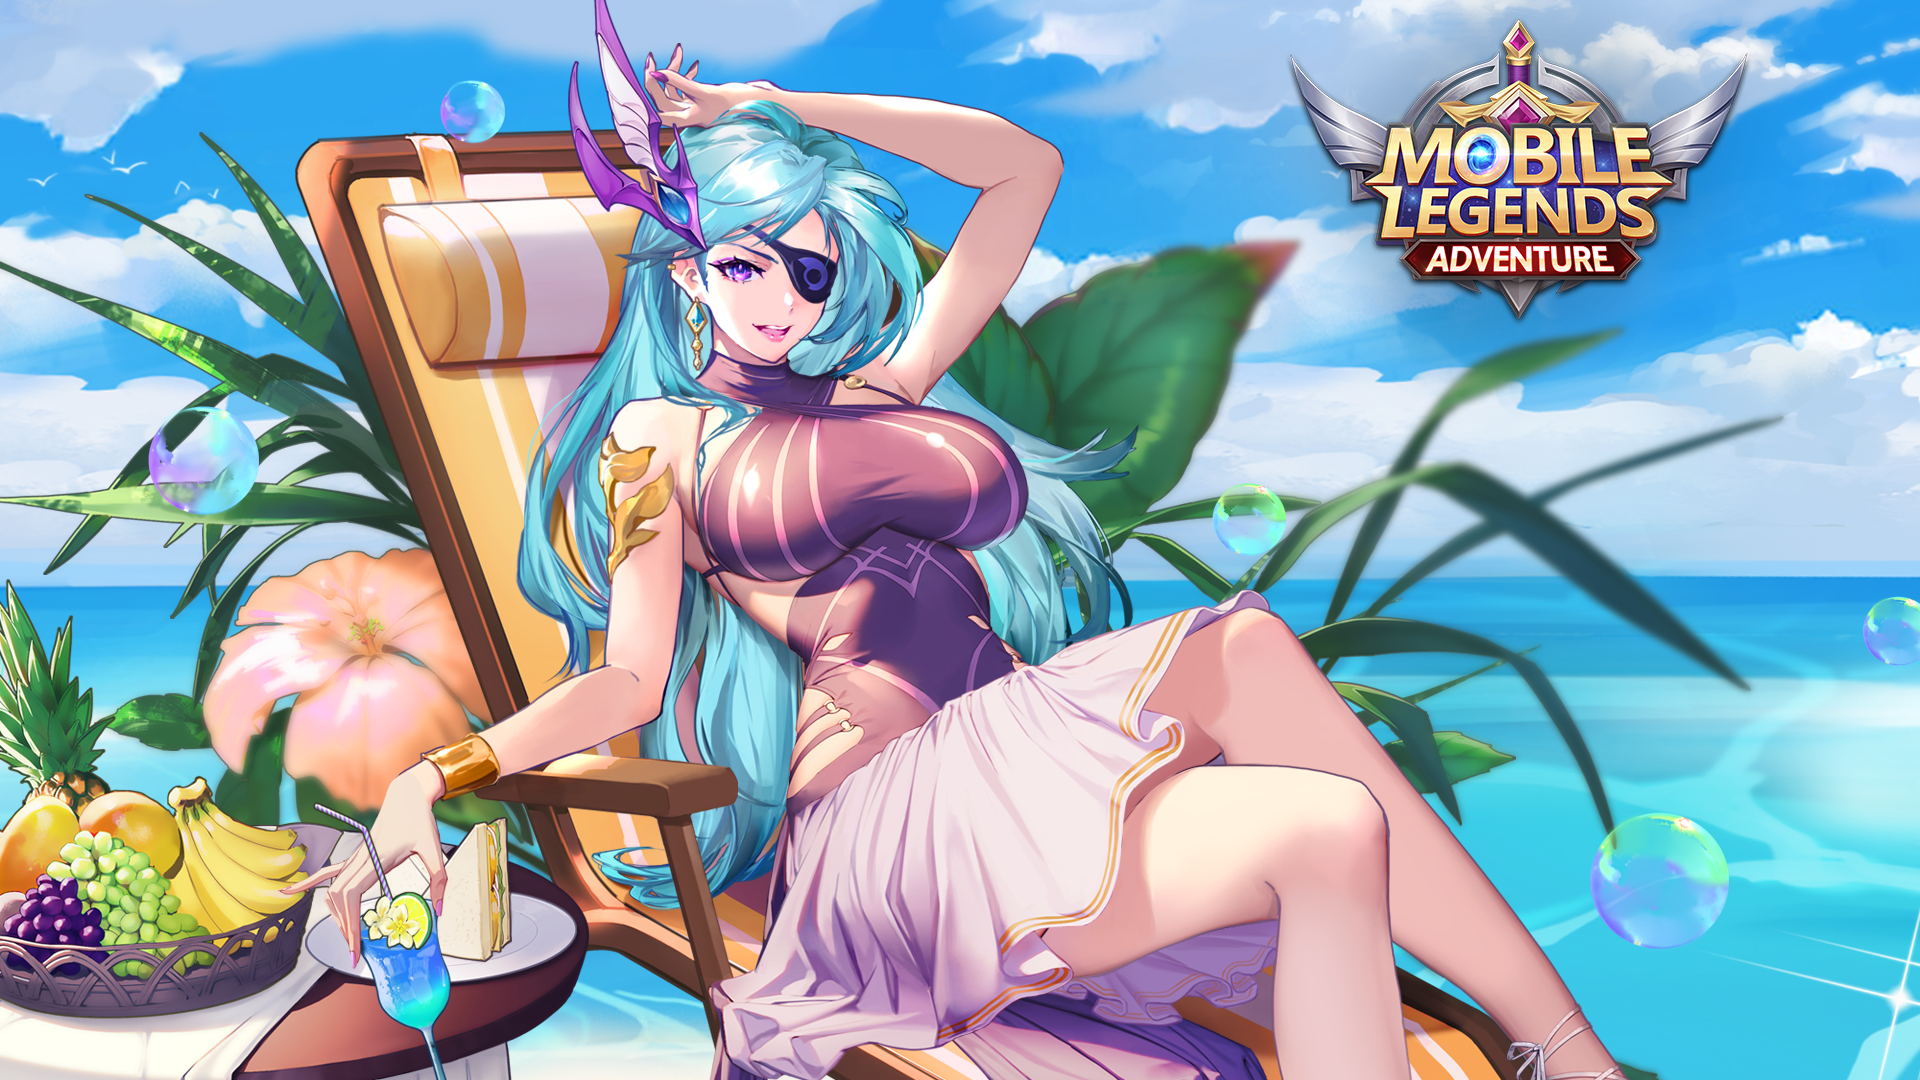 Banner of Mobile Legends: Adventure 